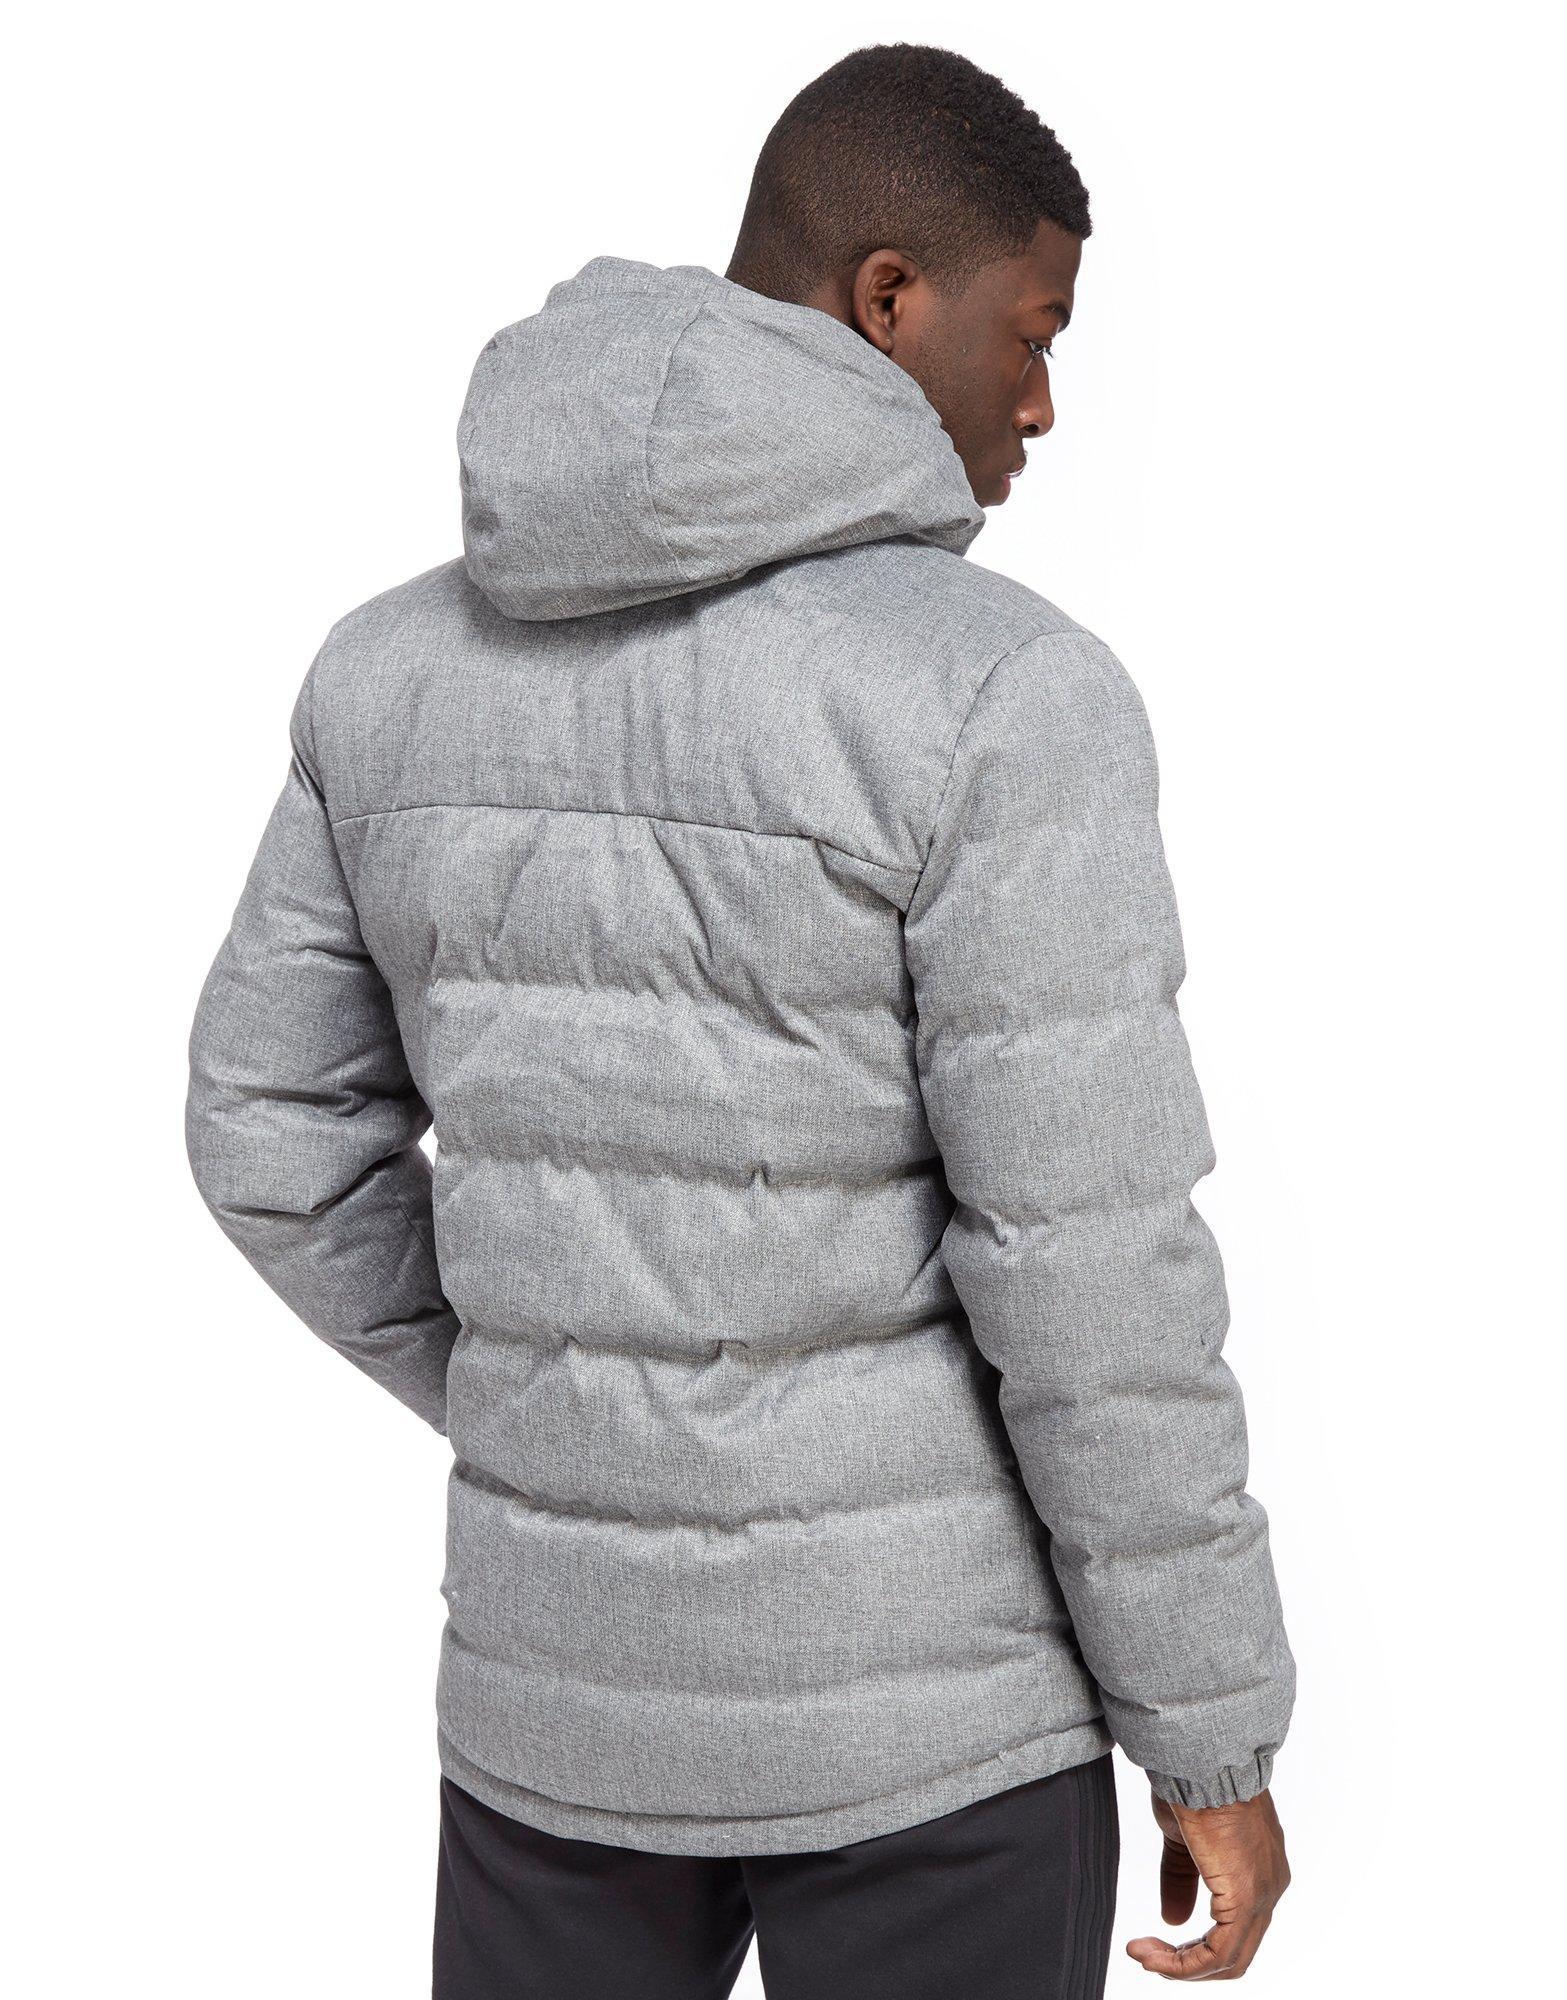 adidas Originals Synthetic Bubble Jacket in Grey Marl (Gray) for Men - Lyst